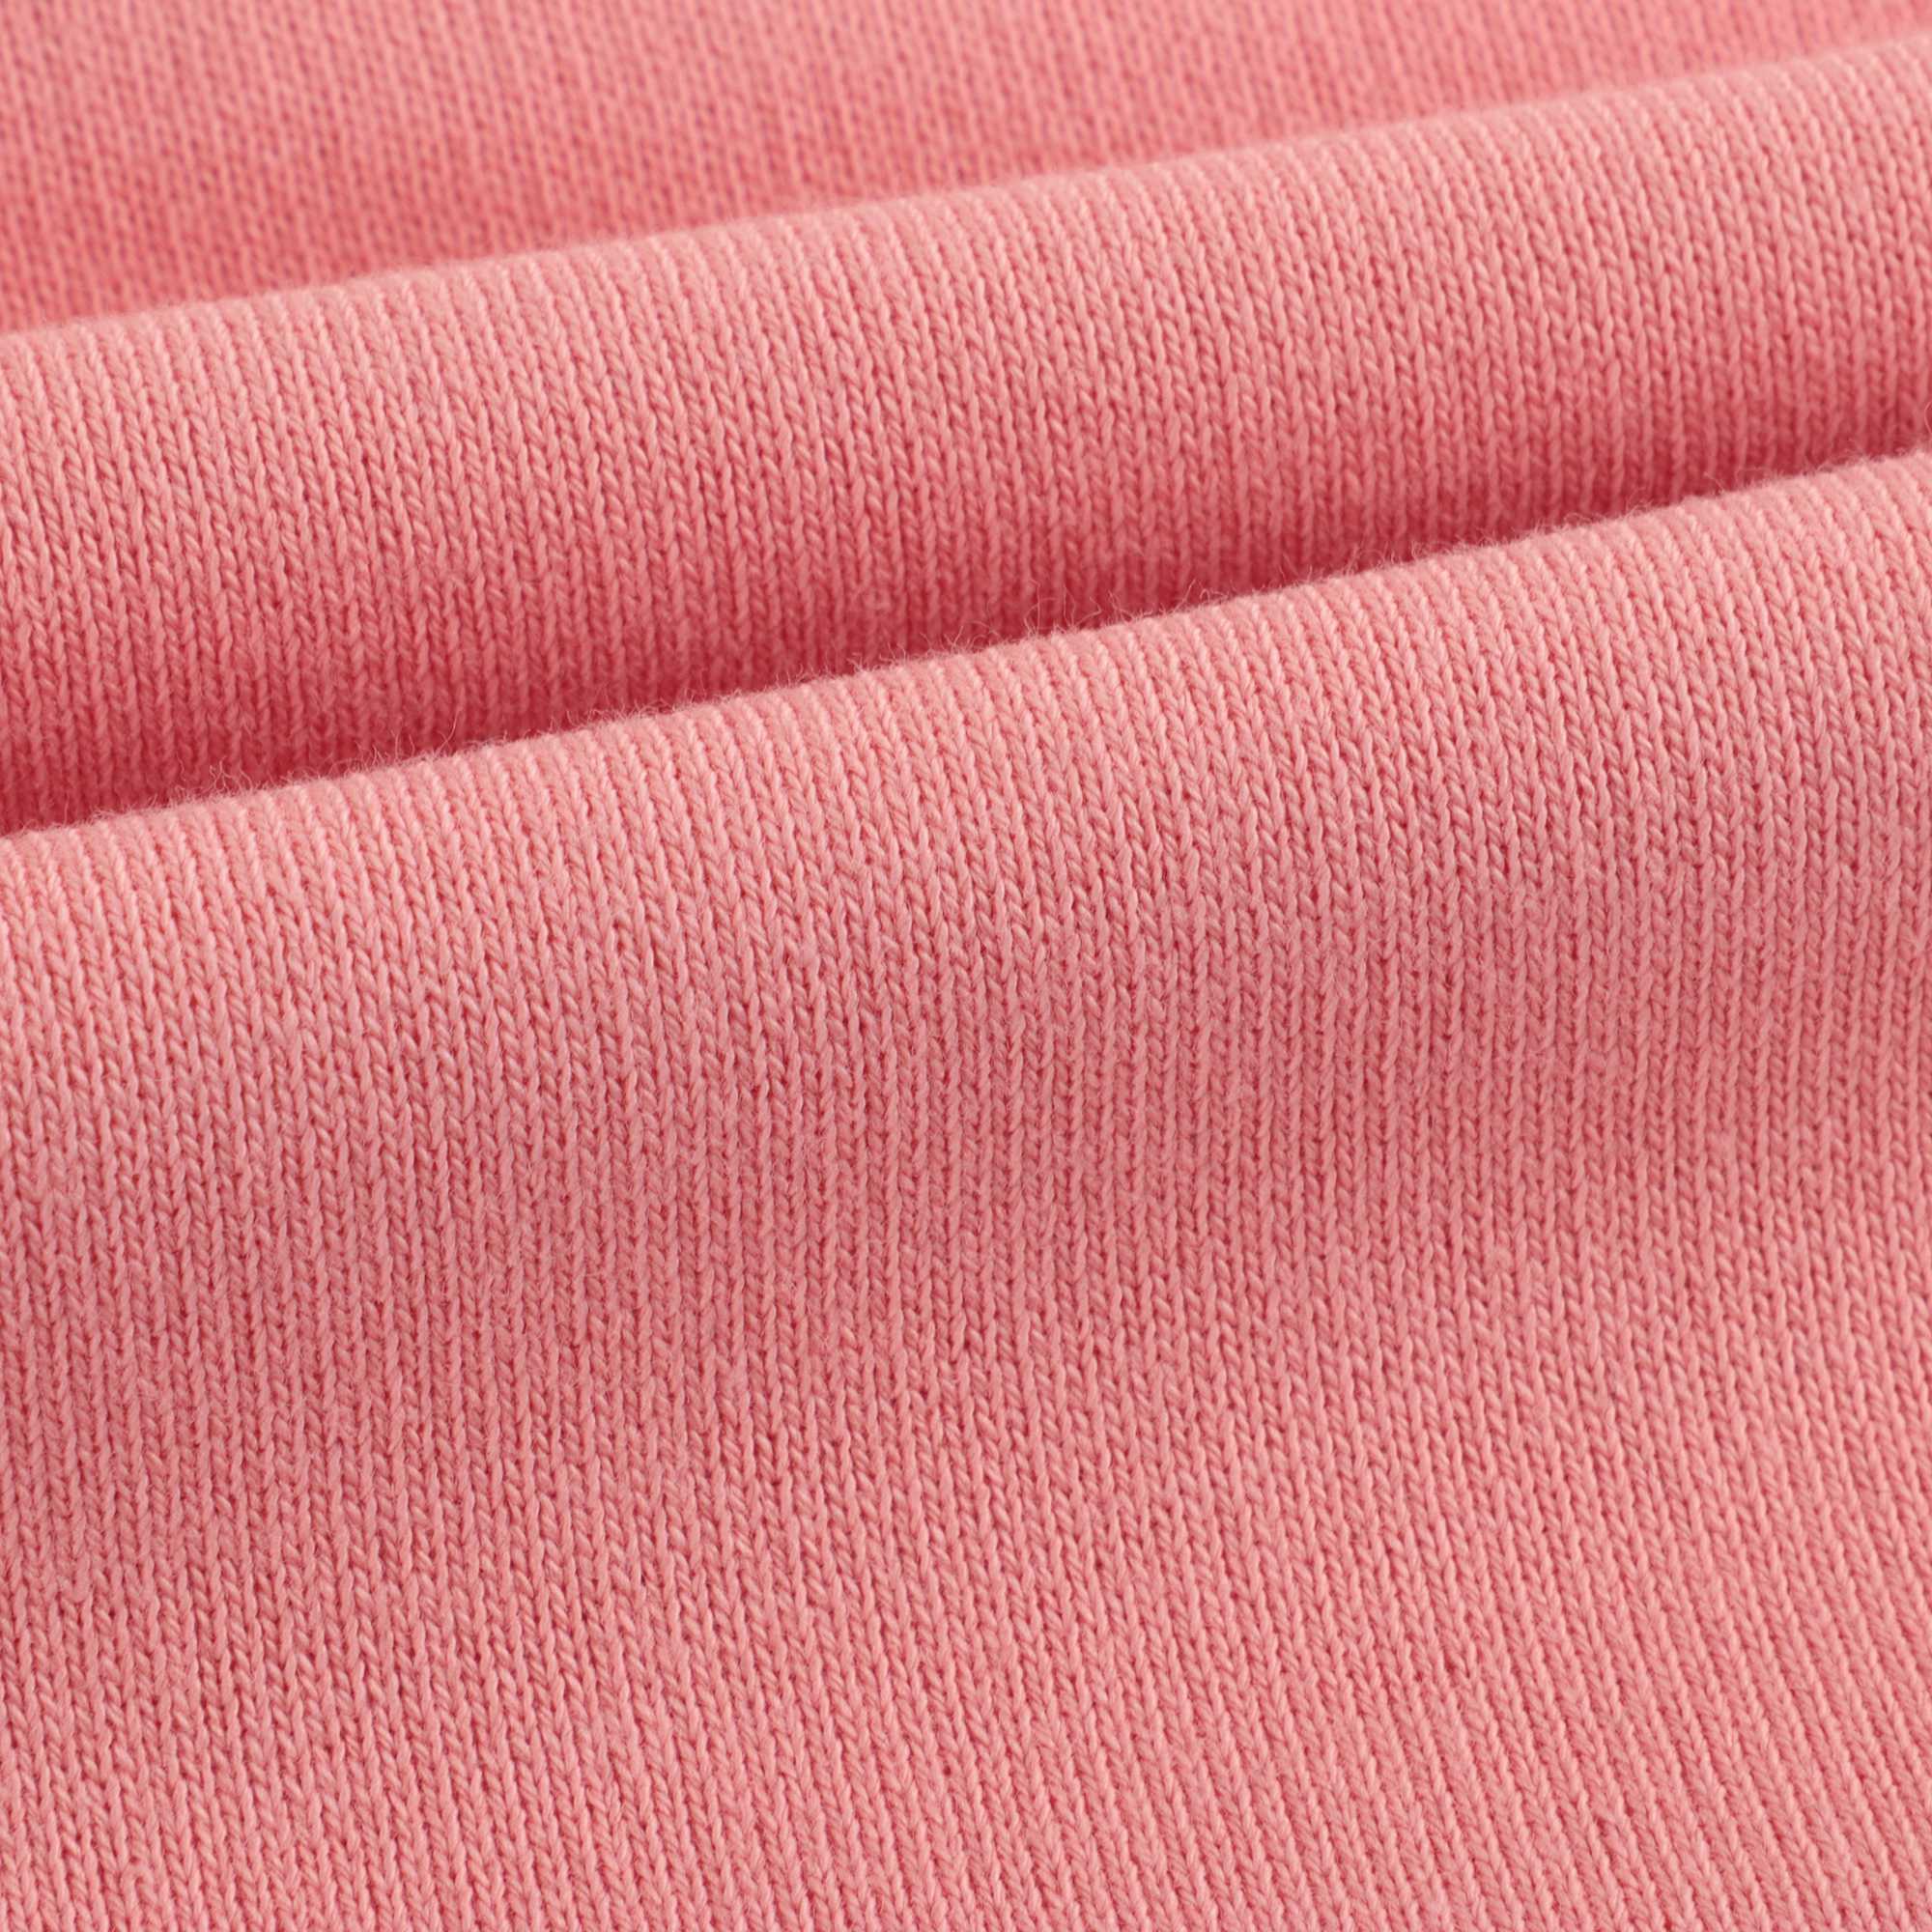 Boys & Girls Pink Logo Cotton Trousers